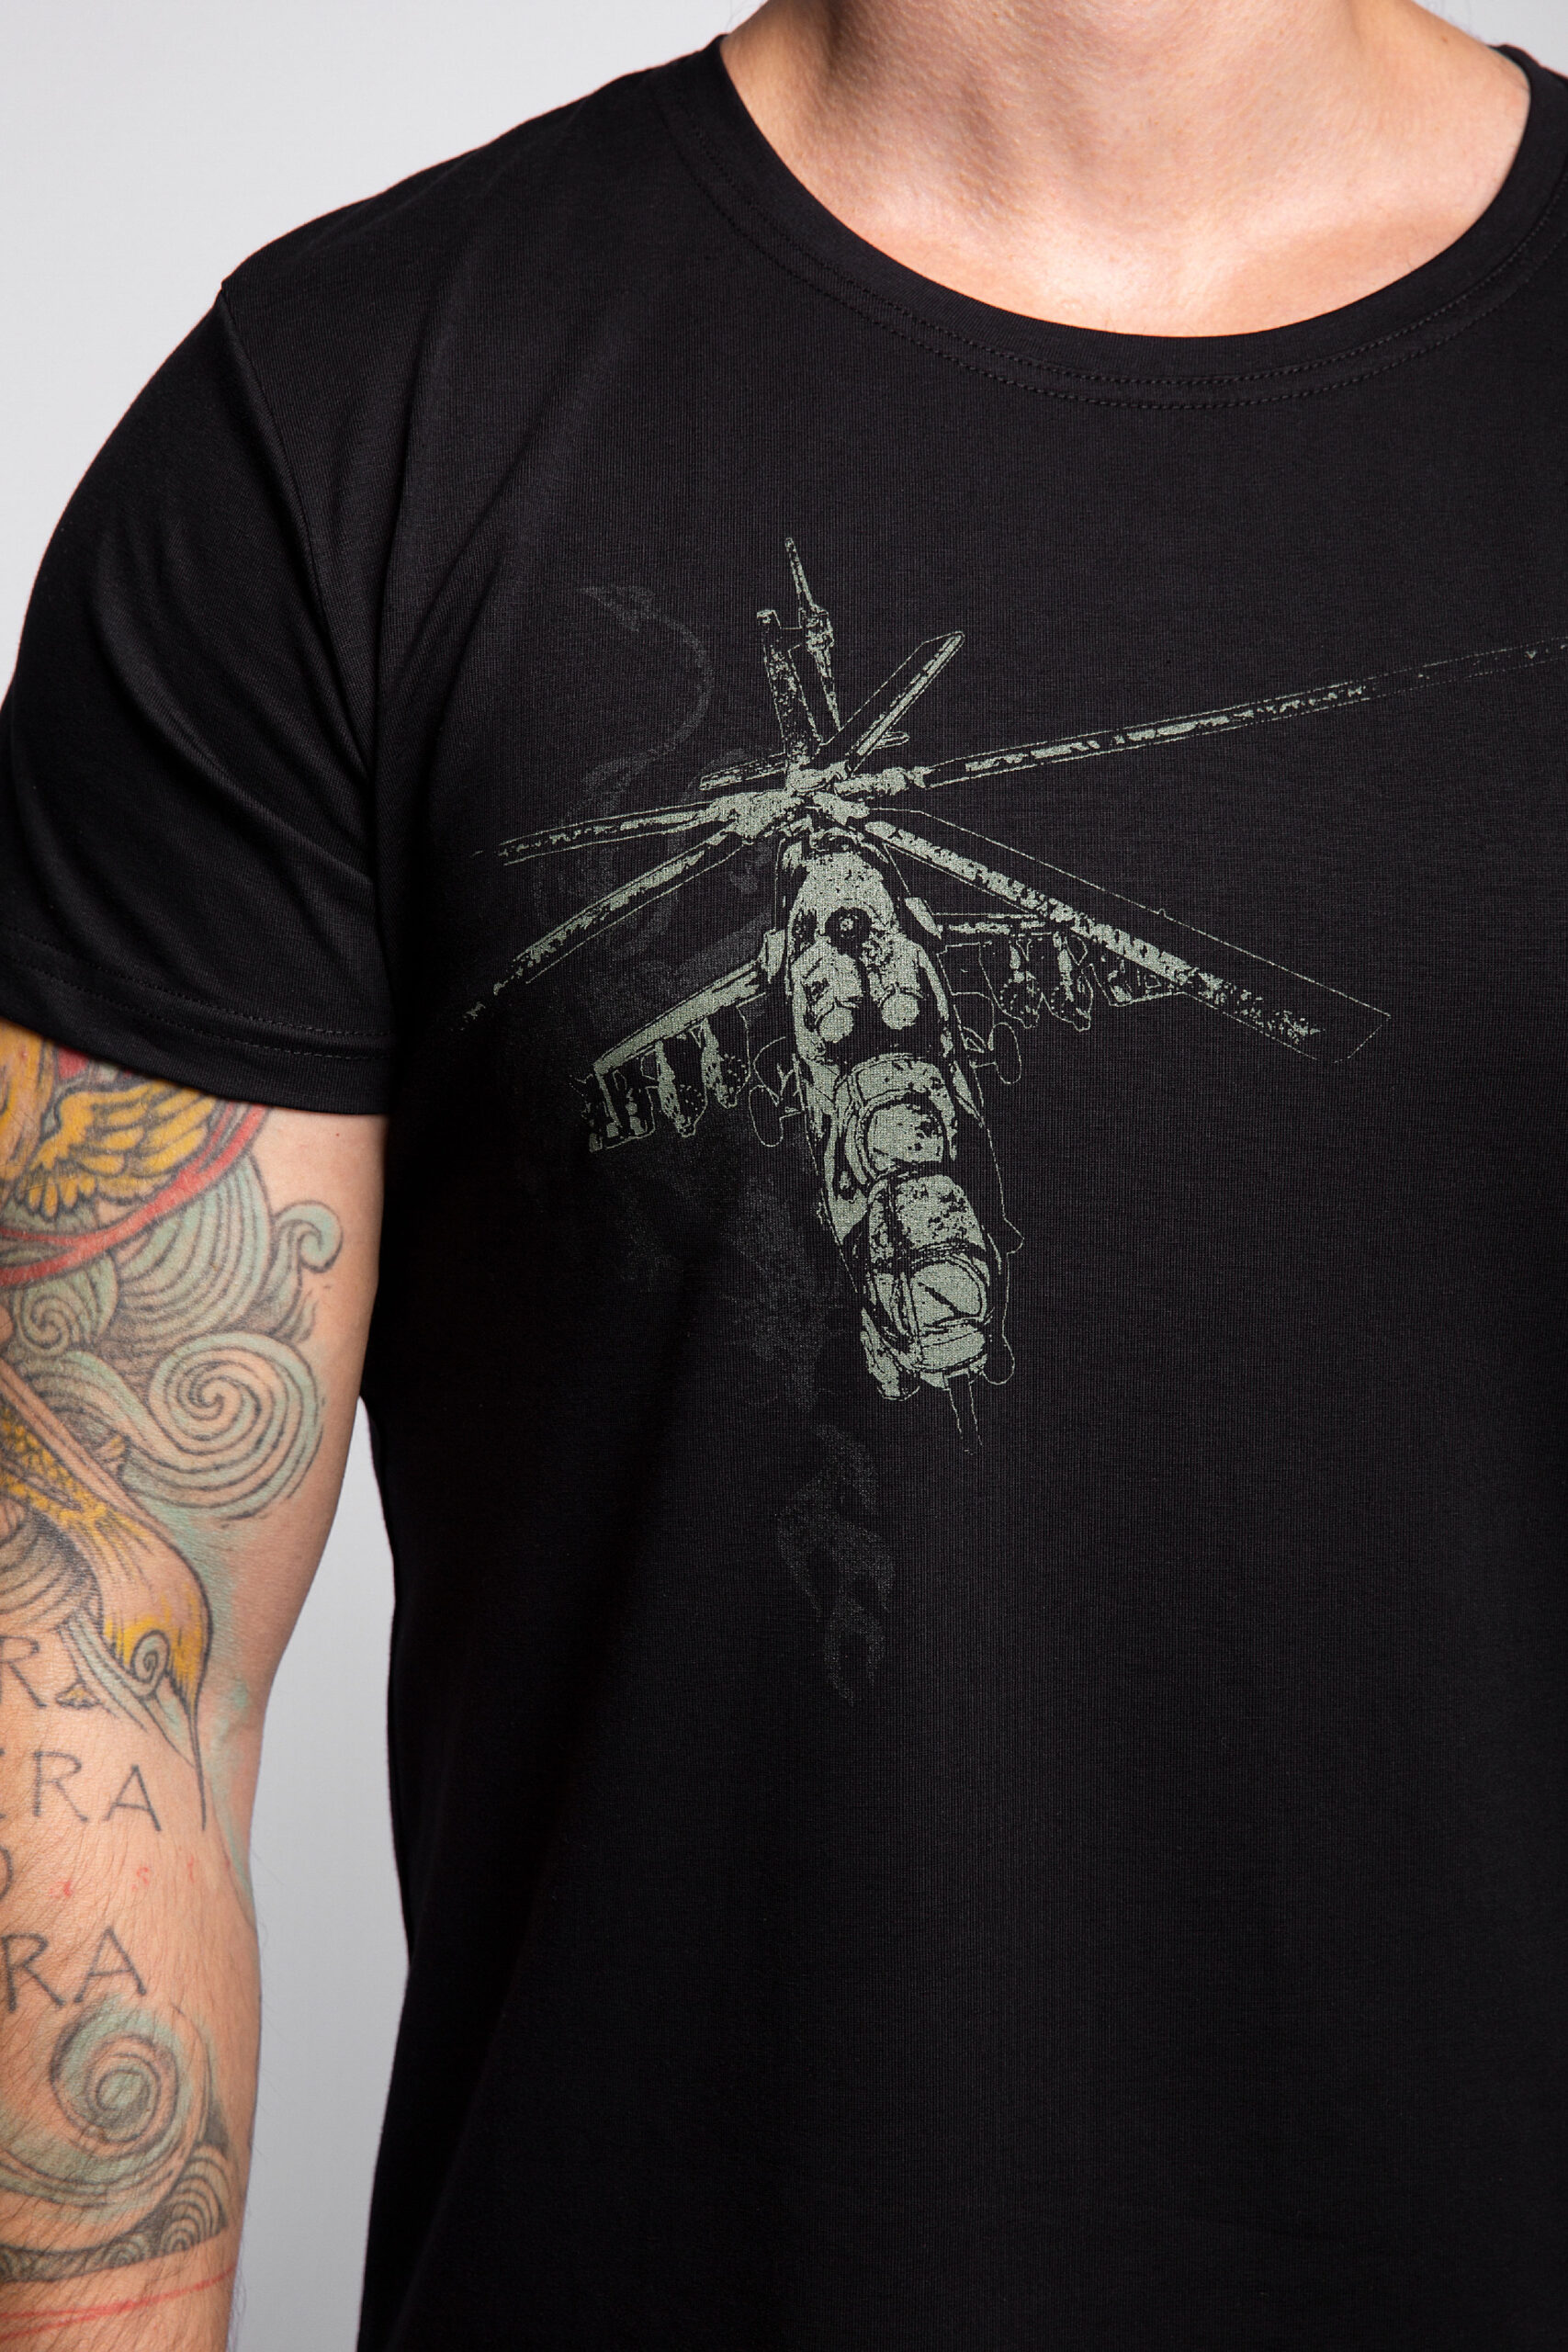 Men's T-Shirt Fire Of Fiery 3.0. Color black. 
Technique of prints applied: silkscreen printing.